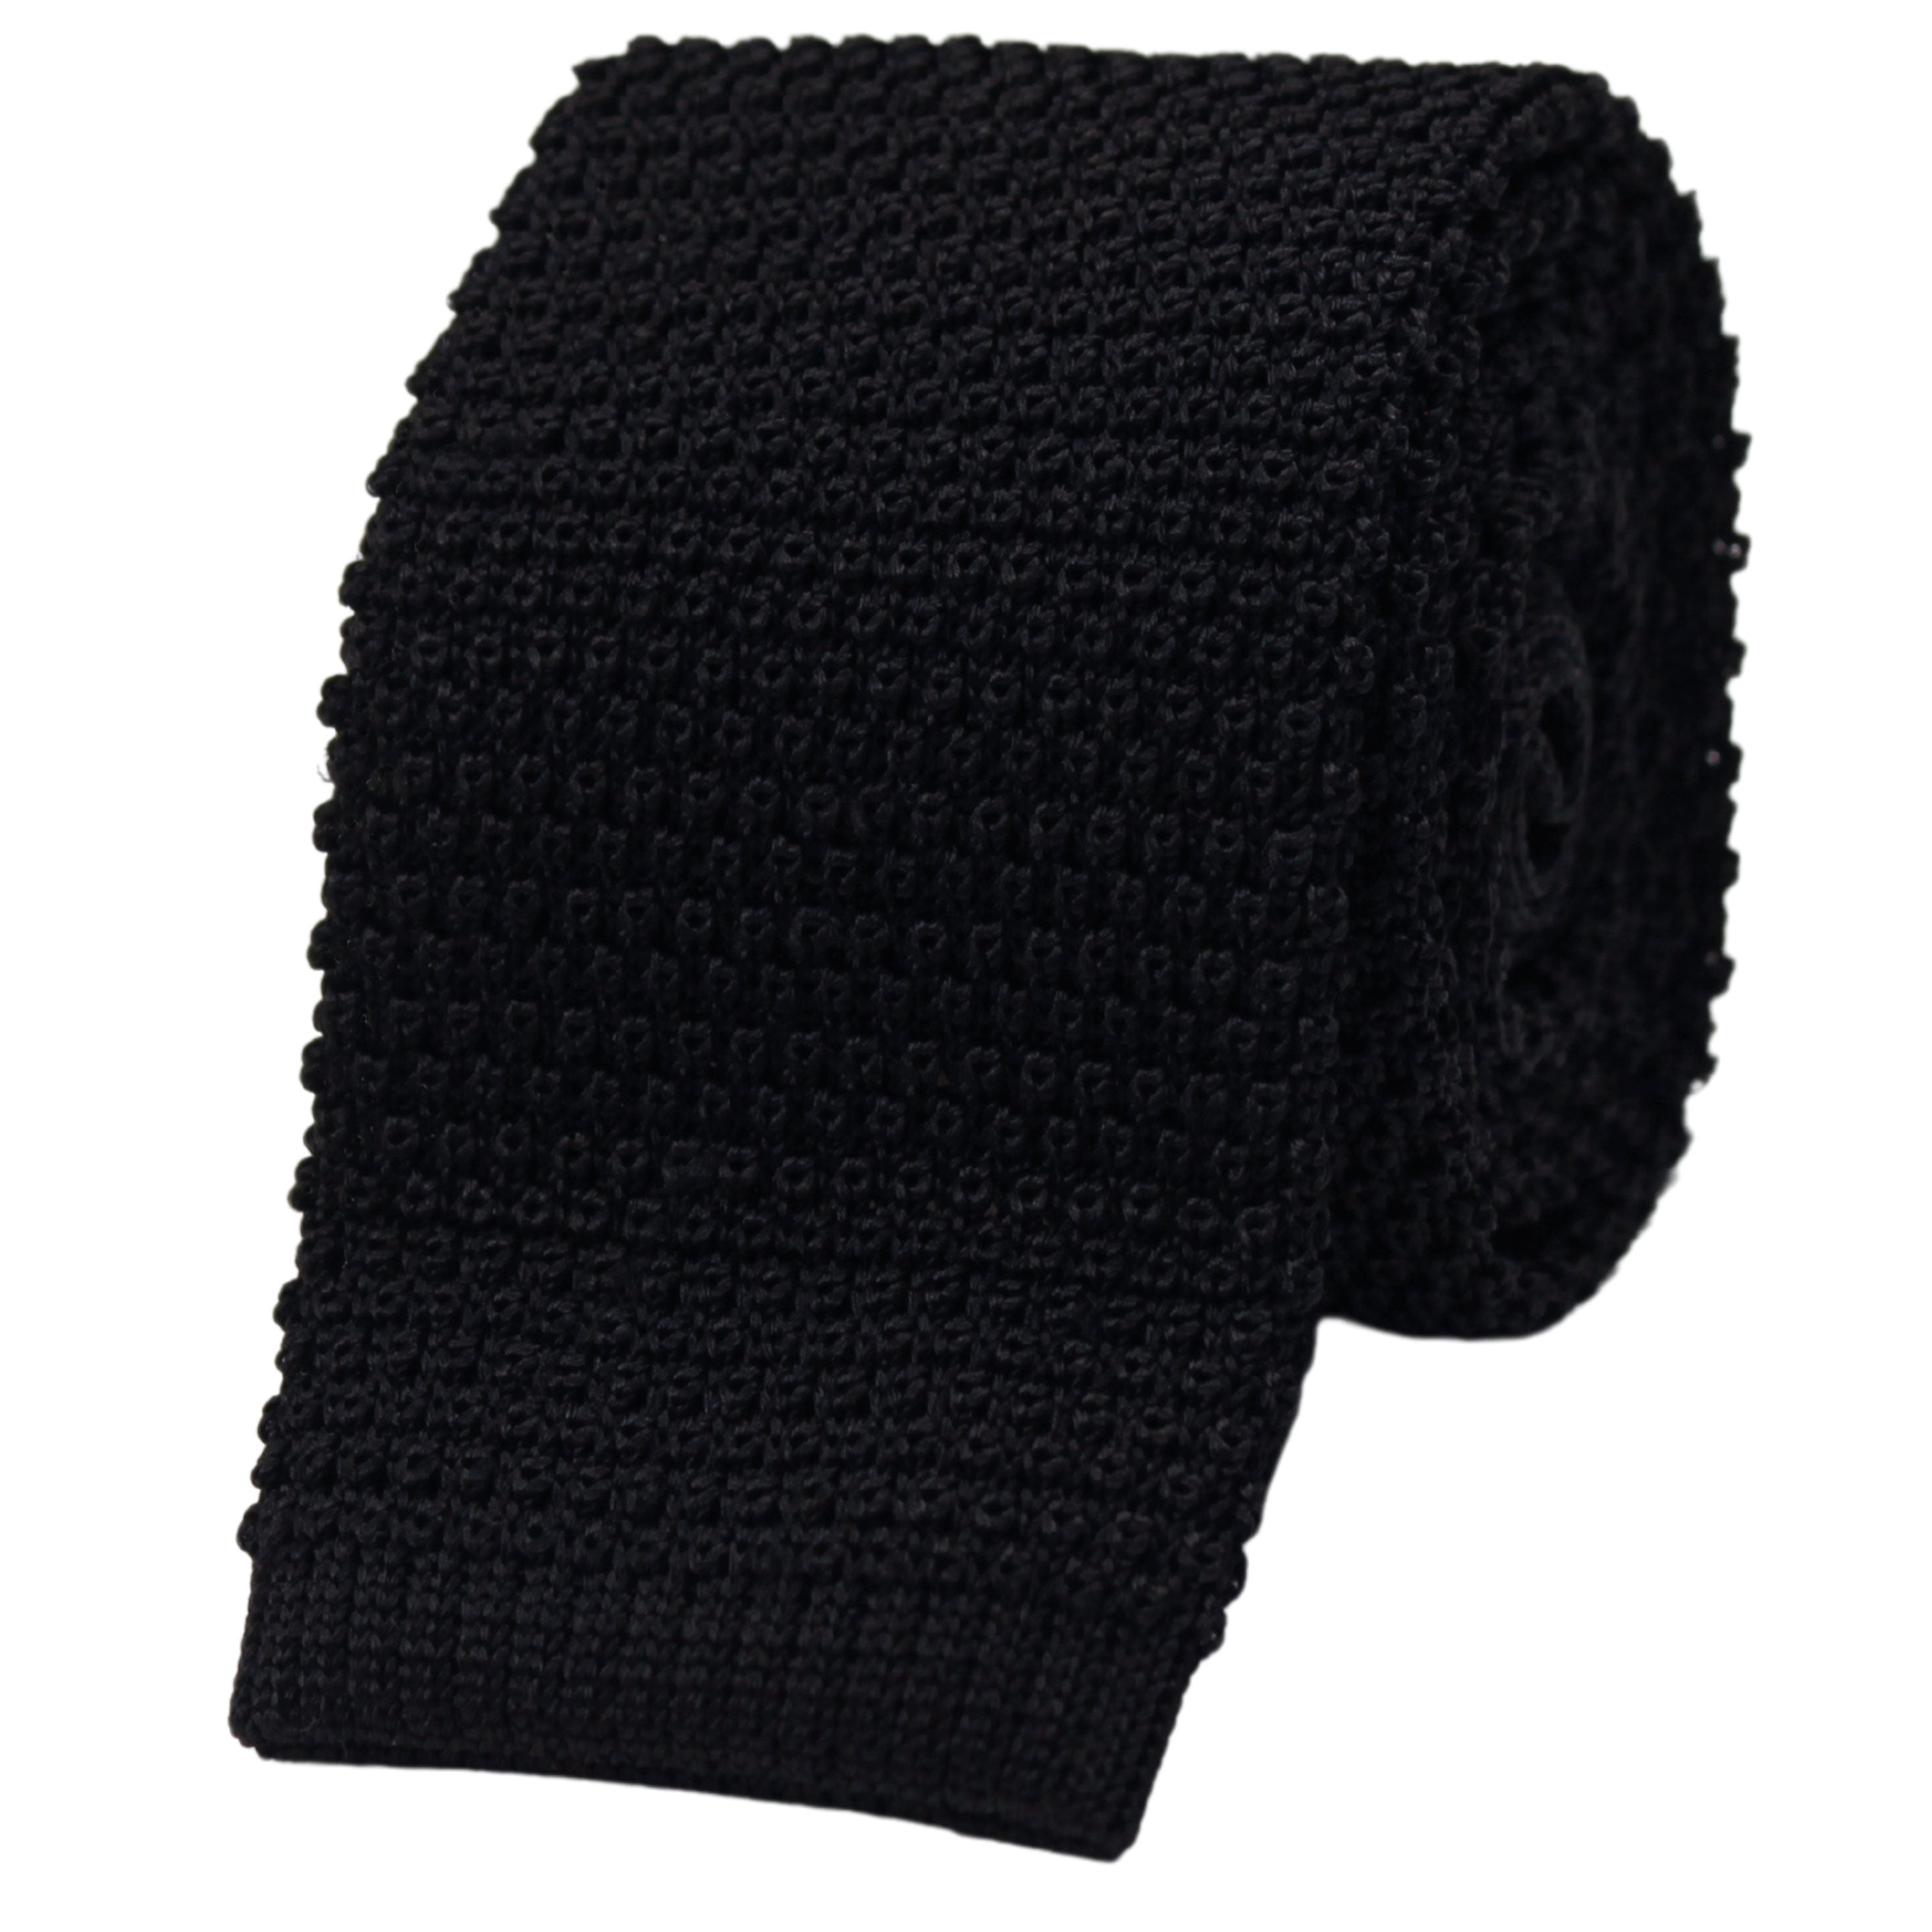 Black Knit Silk Tie